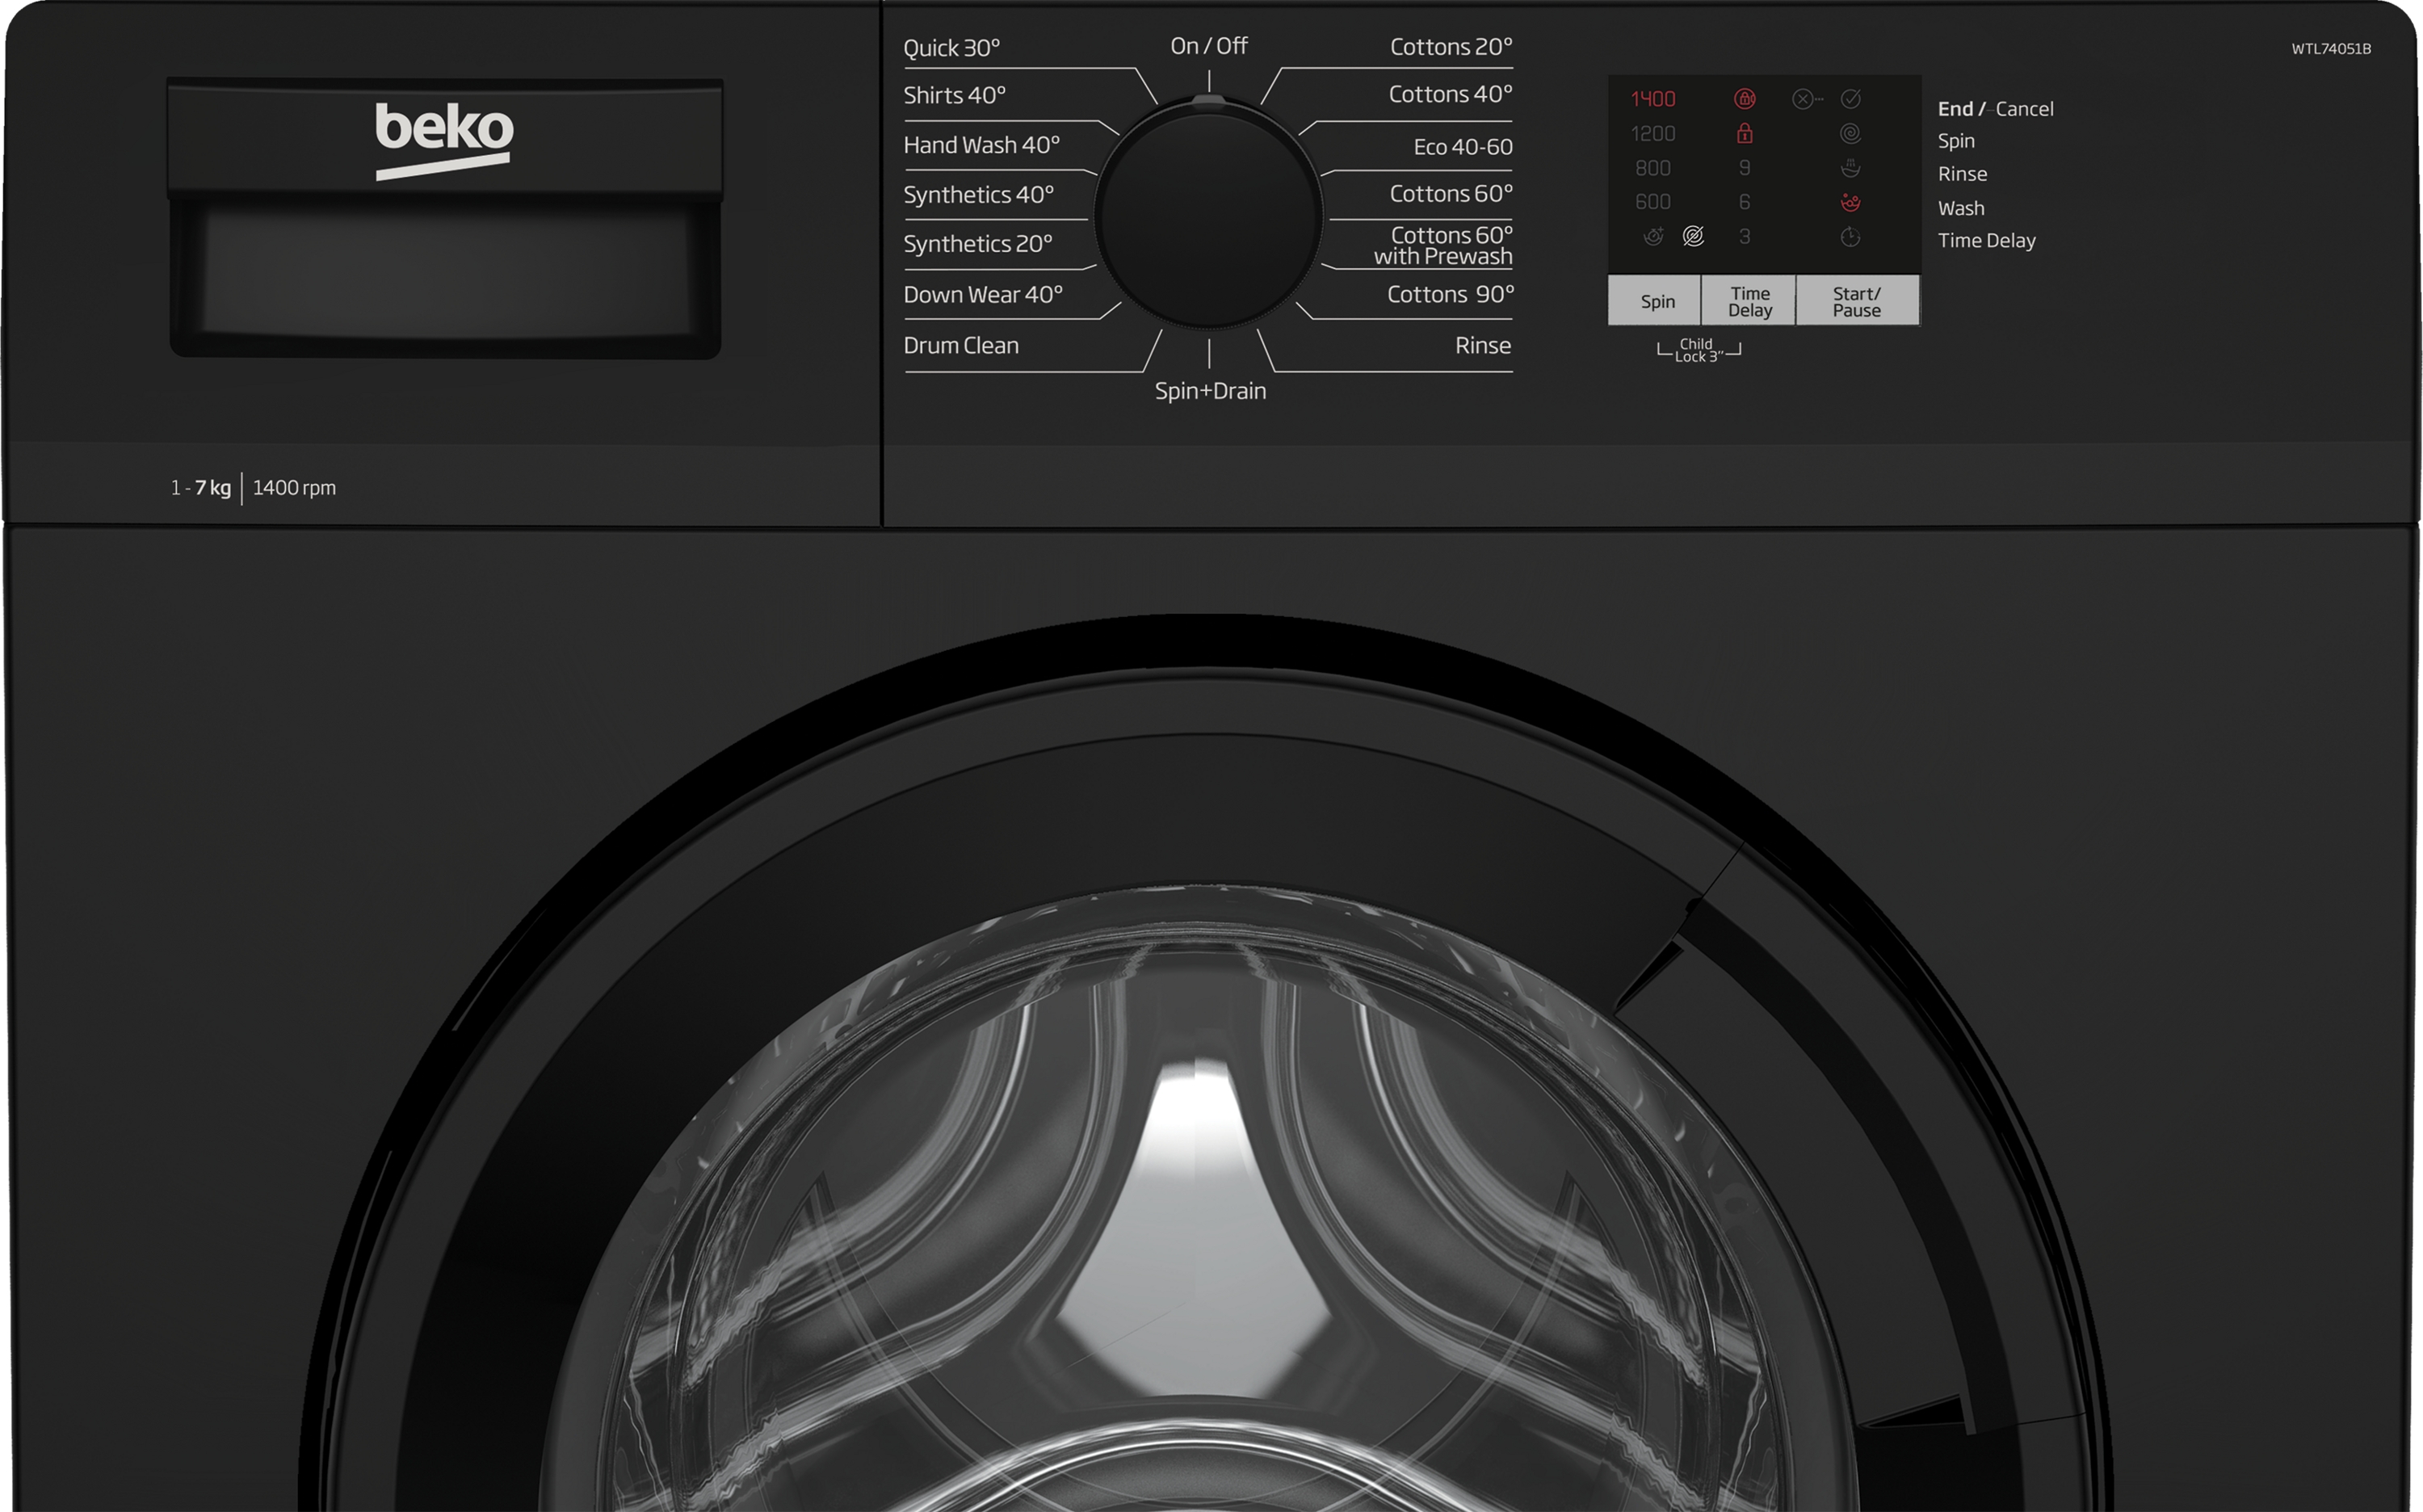 Beko 7kg 1400rpm Washing Machine WTL74051B